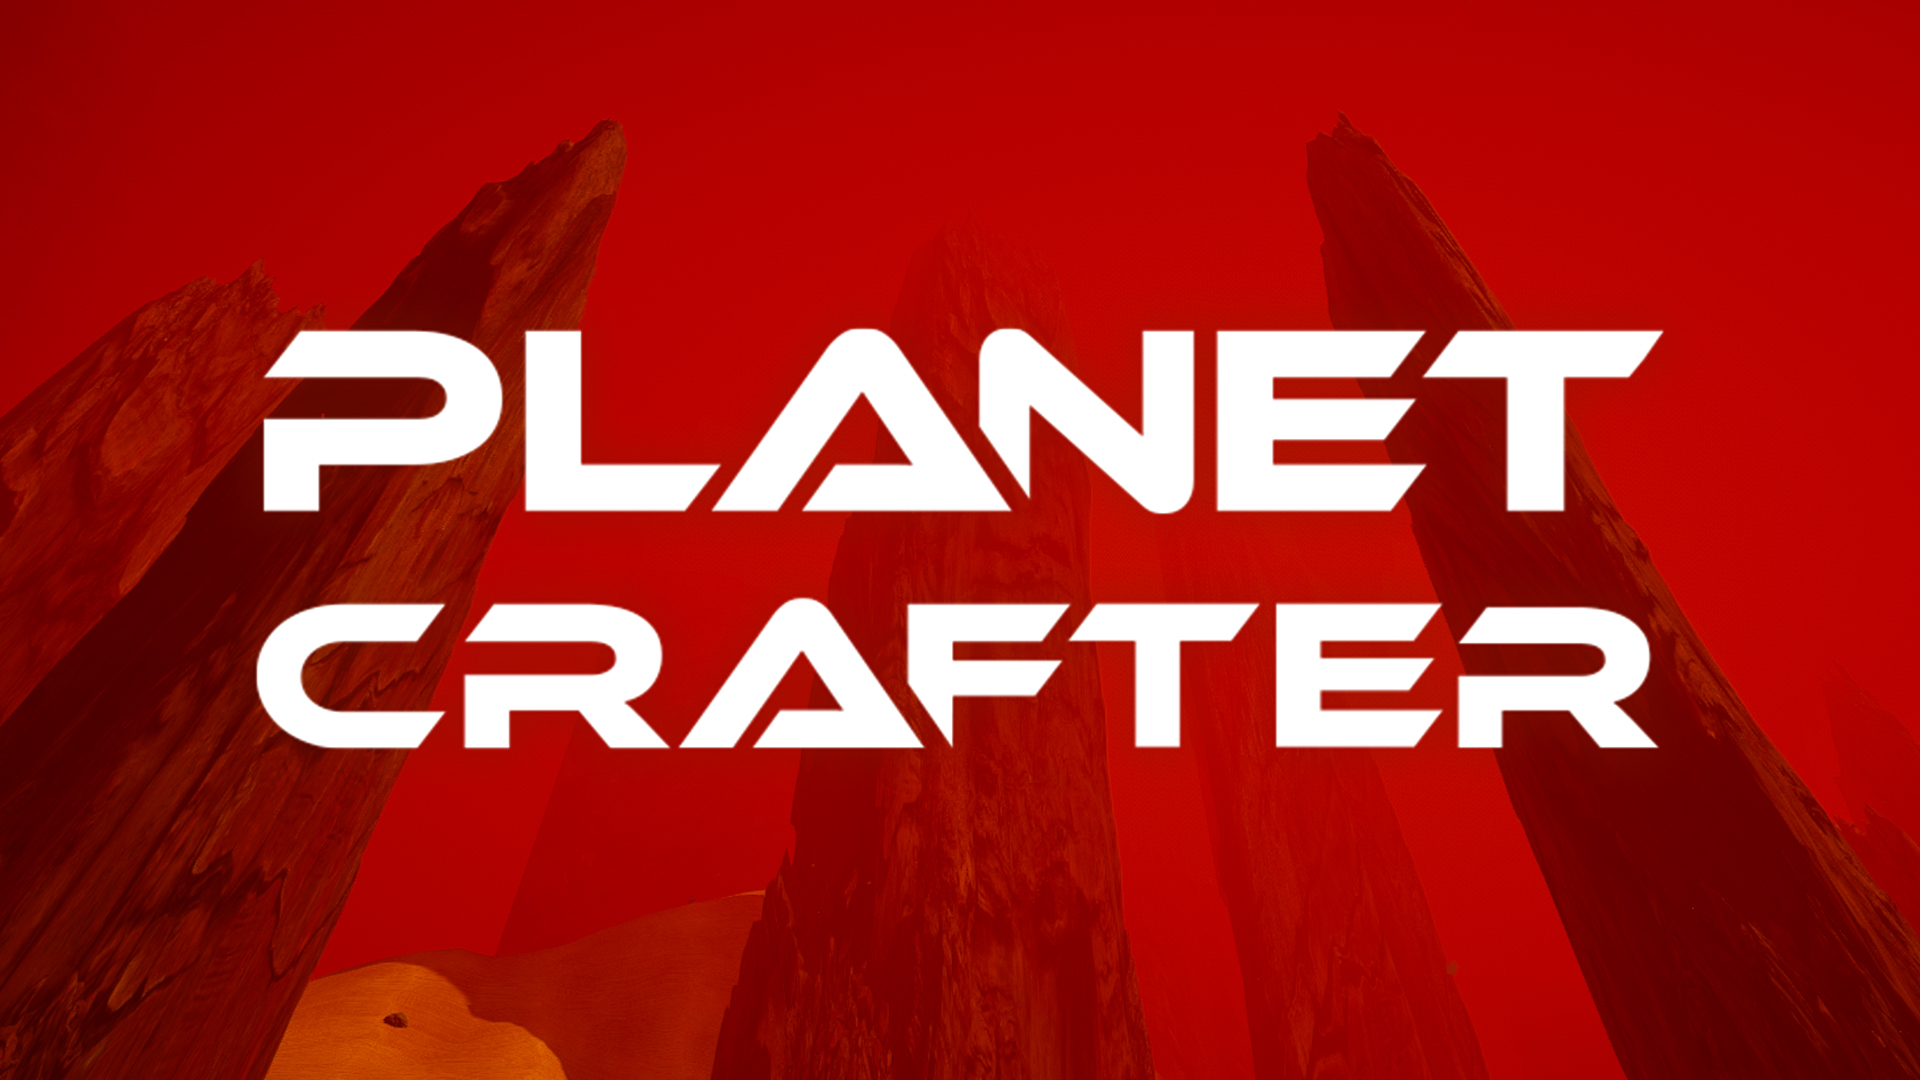 ФИНАЛ ПРОЛОГА. ШОК ▣ The Planet Crafter: Prologue #6